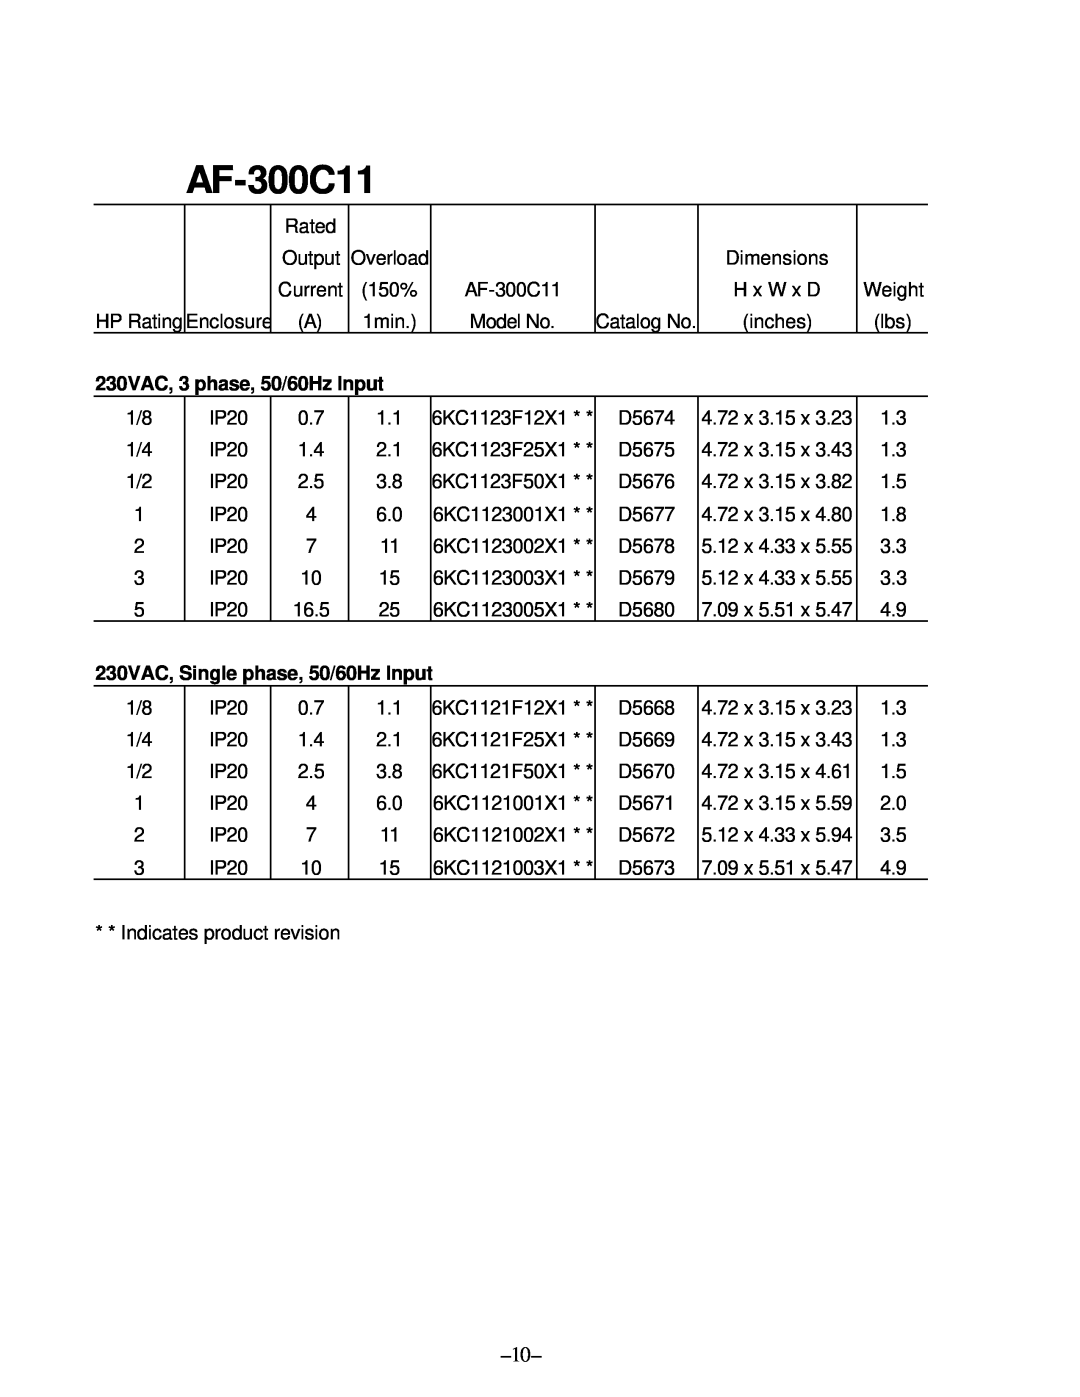 GE manual 230VAC, 3 phase, 50/60Hz Input, 230VAC, Single phase, 50/60Hz Input, AF-300C11 